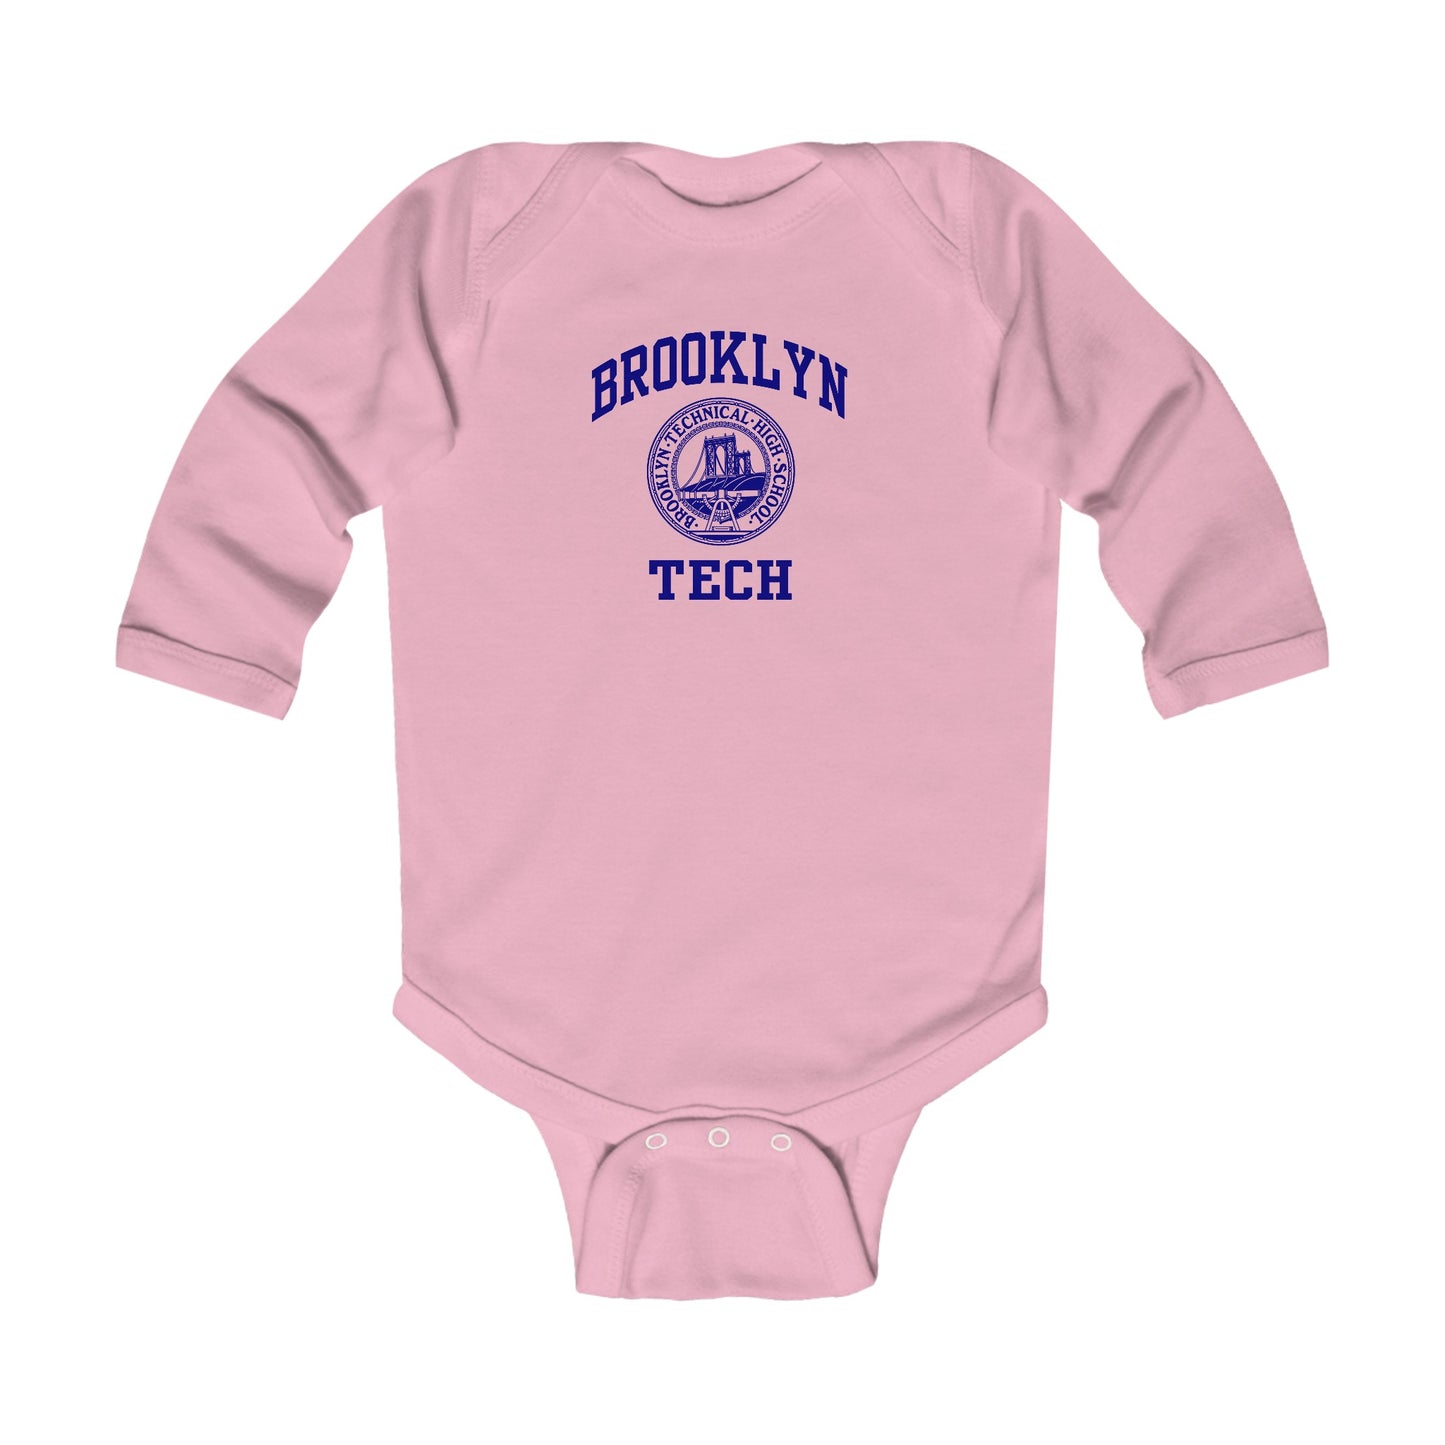 Family - Classic Brooklyn Tech Logo - Infant Long Sleeve Bodysuit